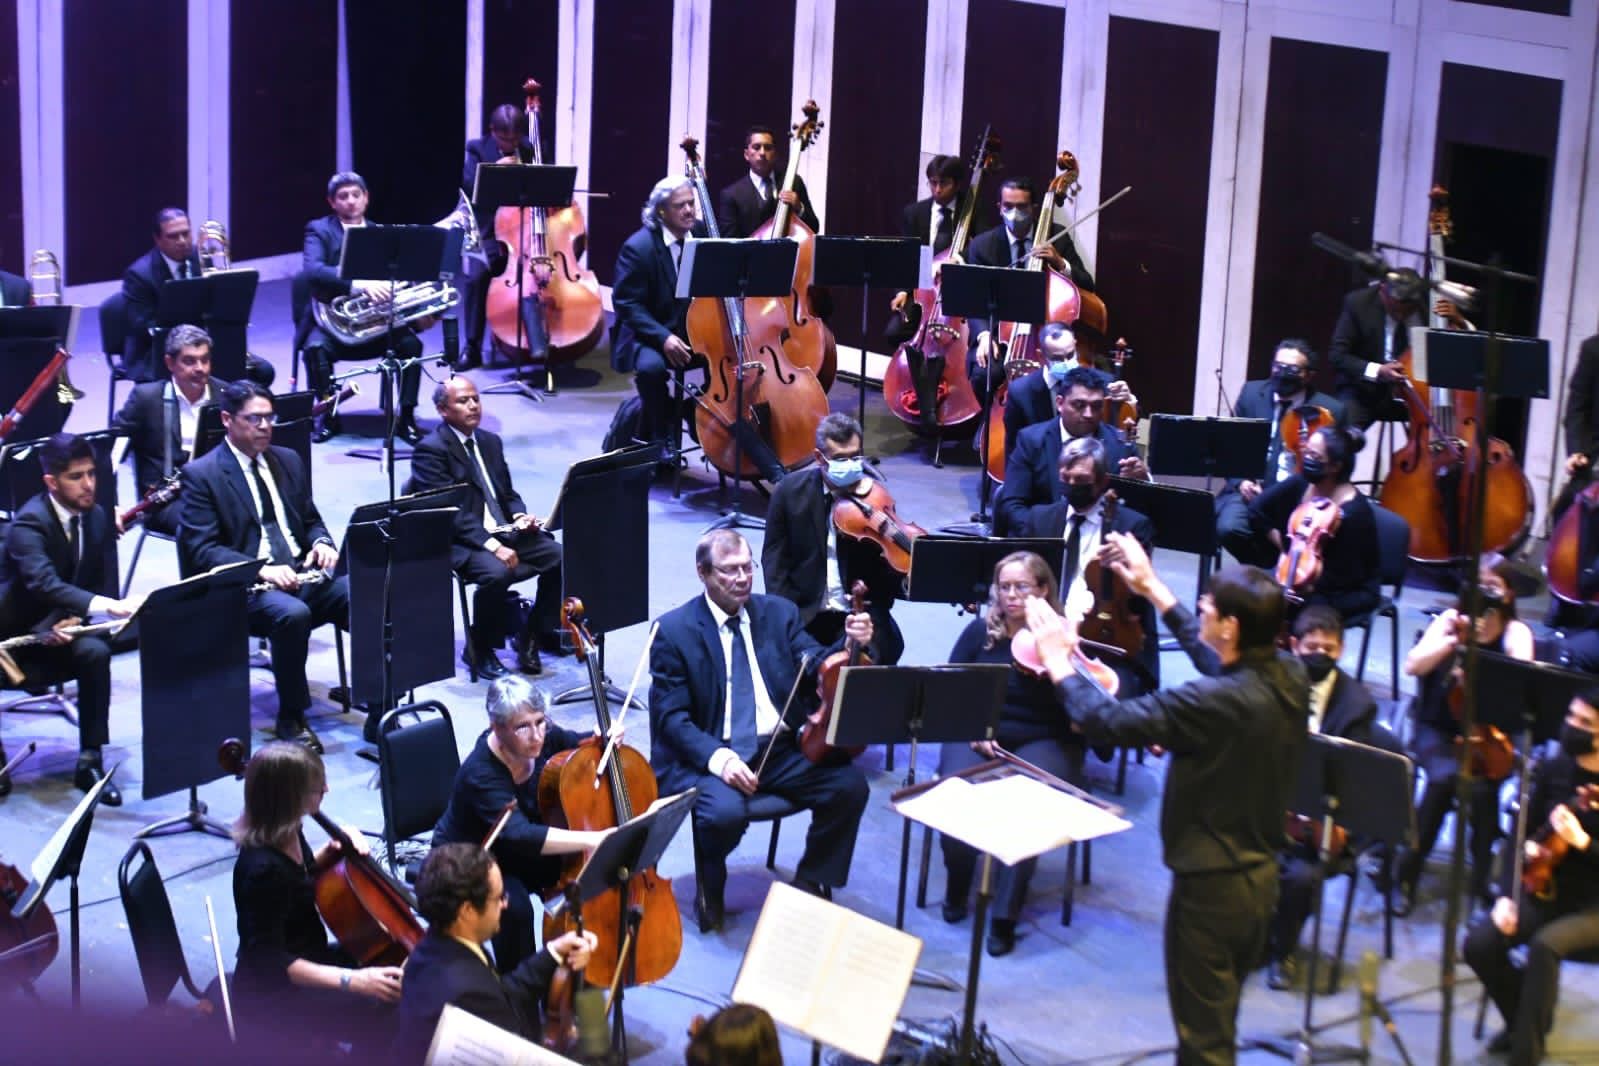 Presenta Orquesta Sinfónica espectacular concierto sobre la obra literaria de Hamlet e Ibsen